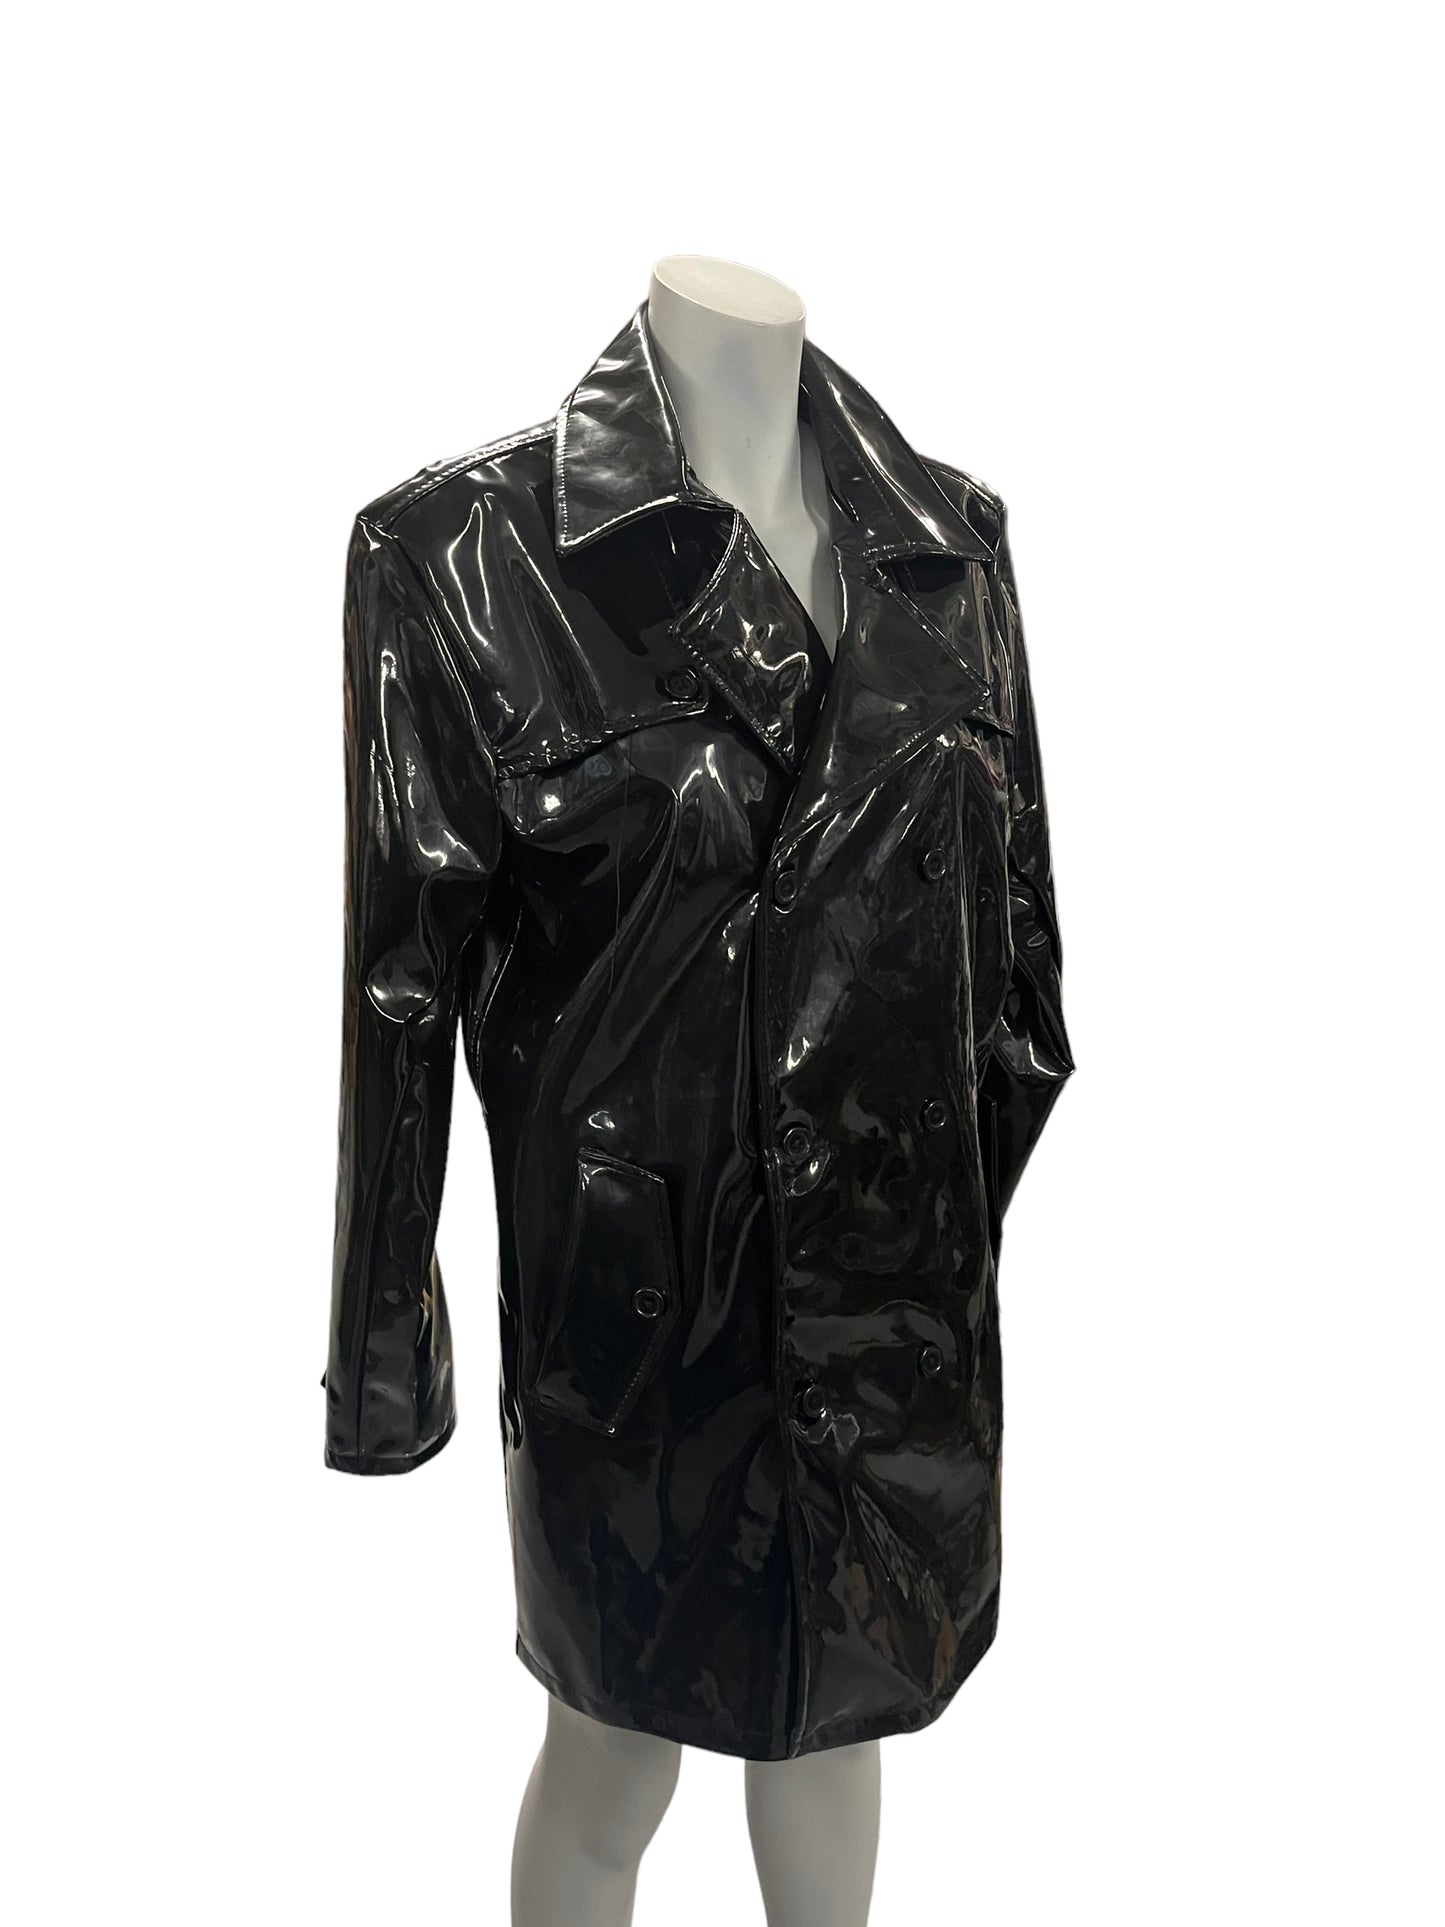 Fashion World - LL95 - Provocative Long Black Jacket With Belt - Size XL